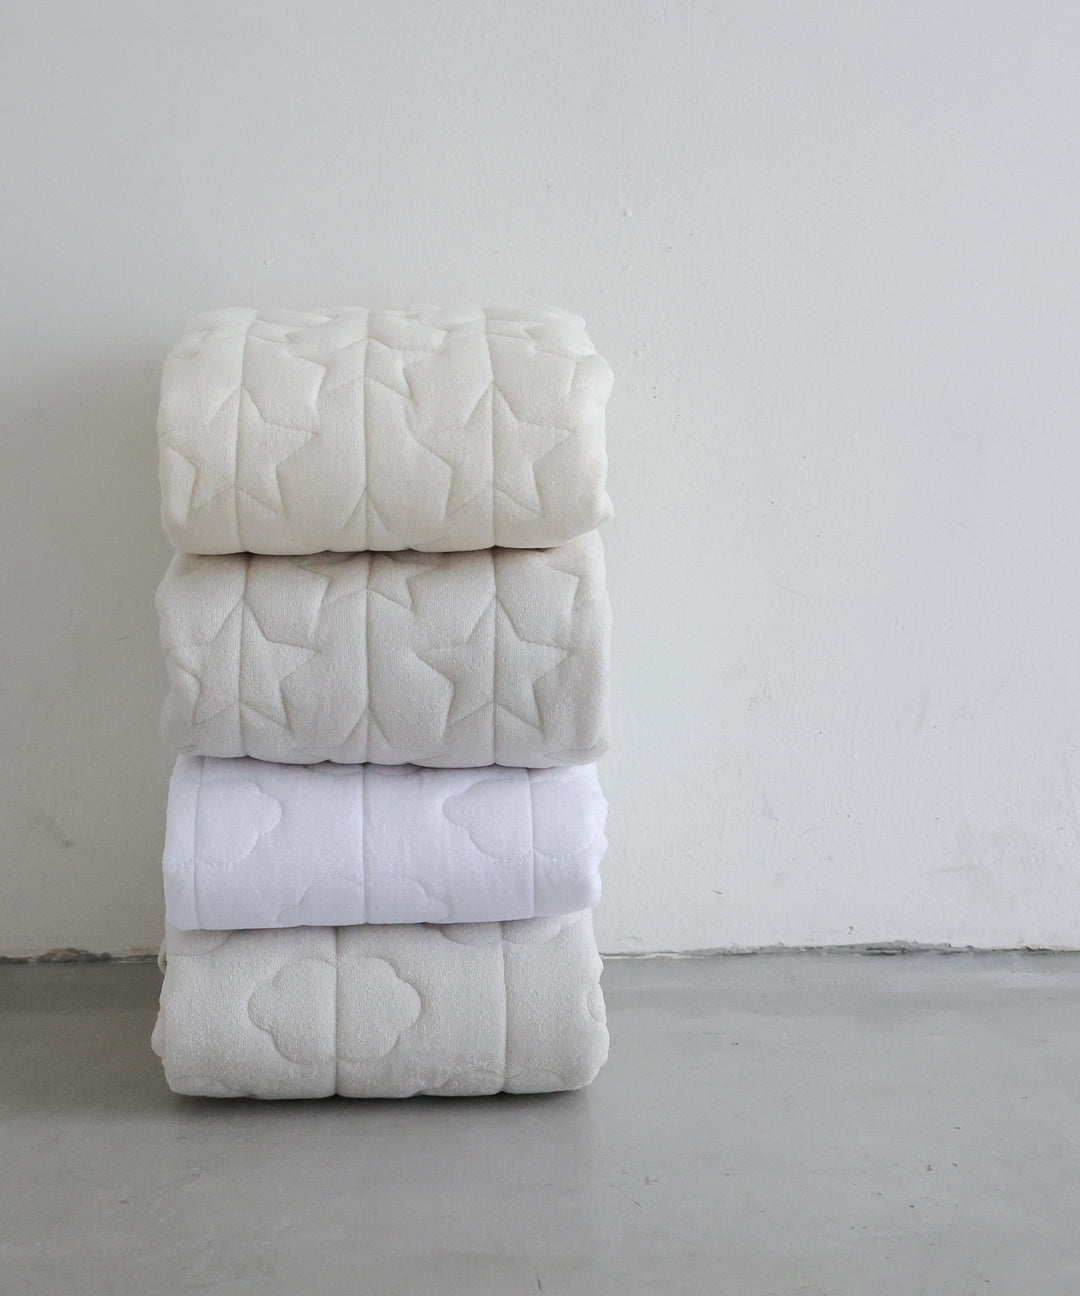 Sleeping mat + [waterproof] mattress pad 47.2″ x 47.2″ (Pile fabric)